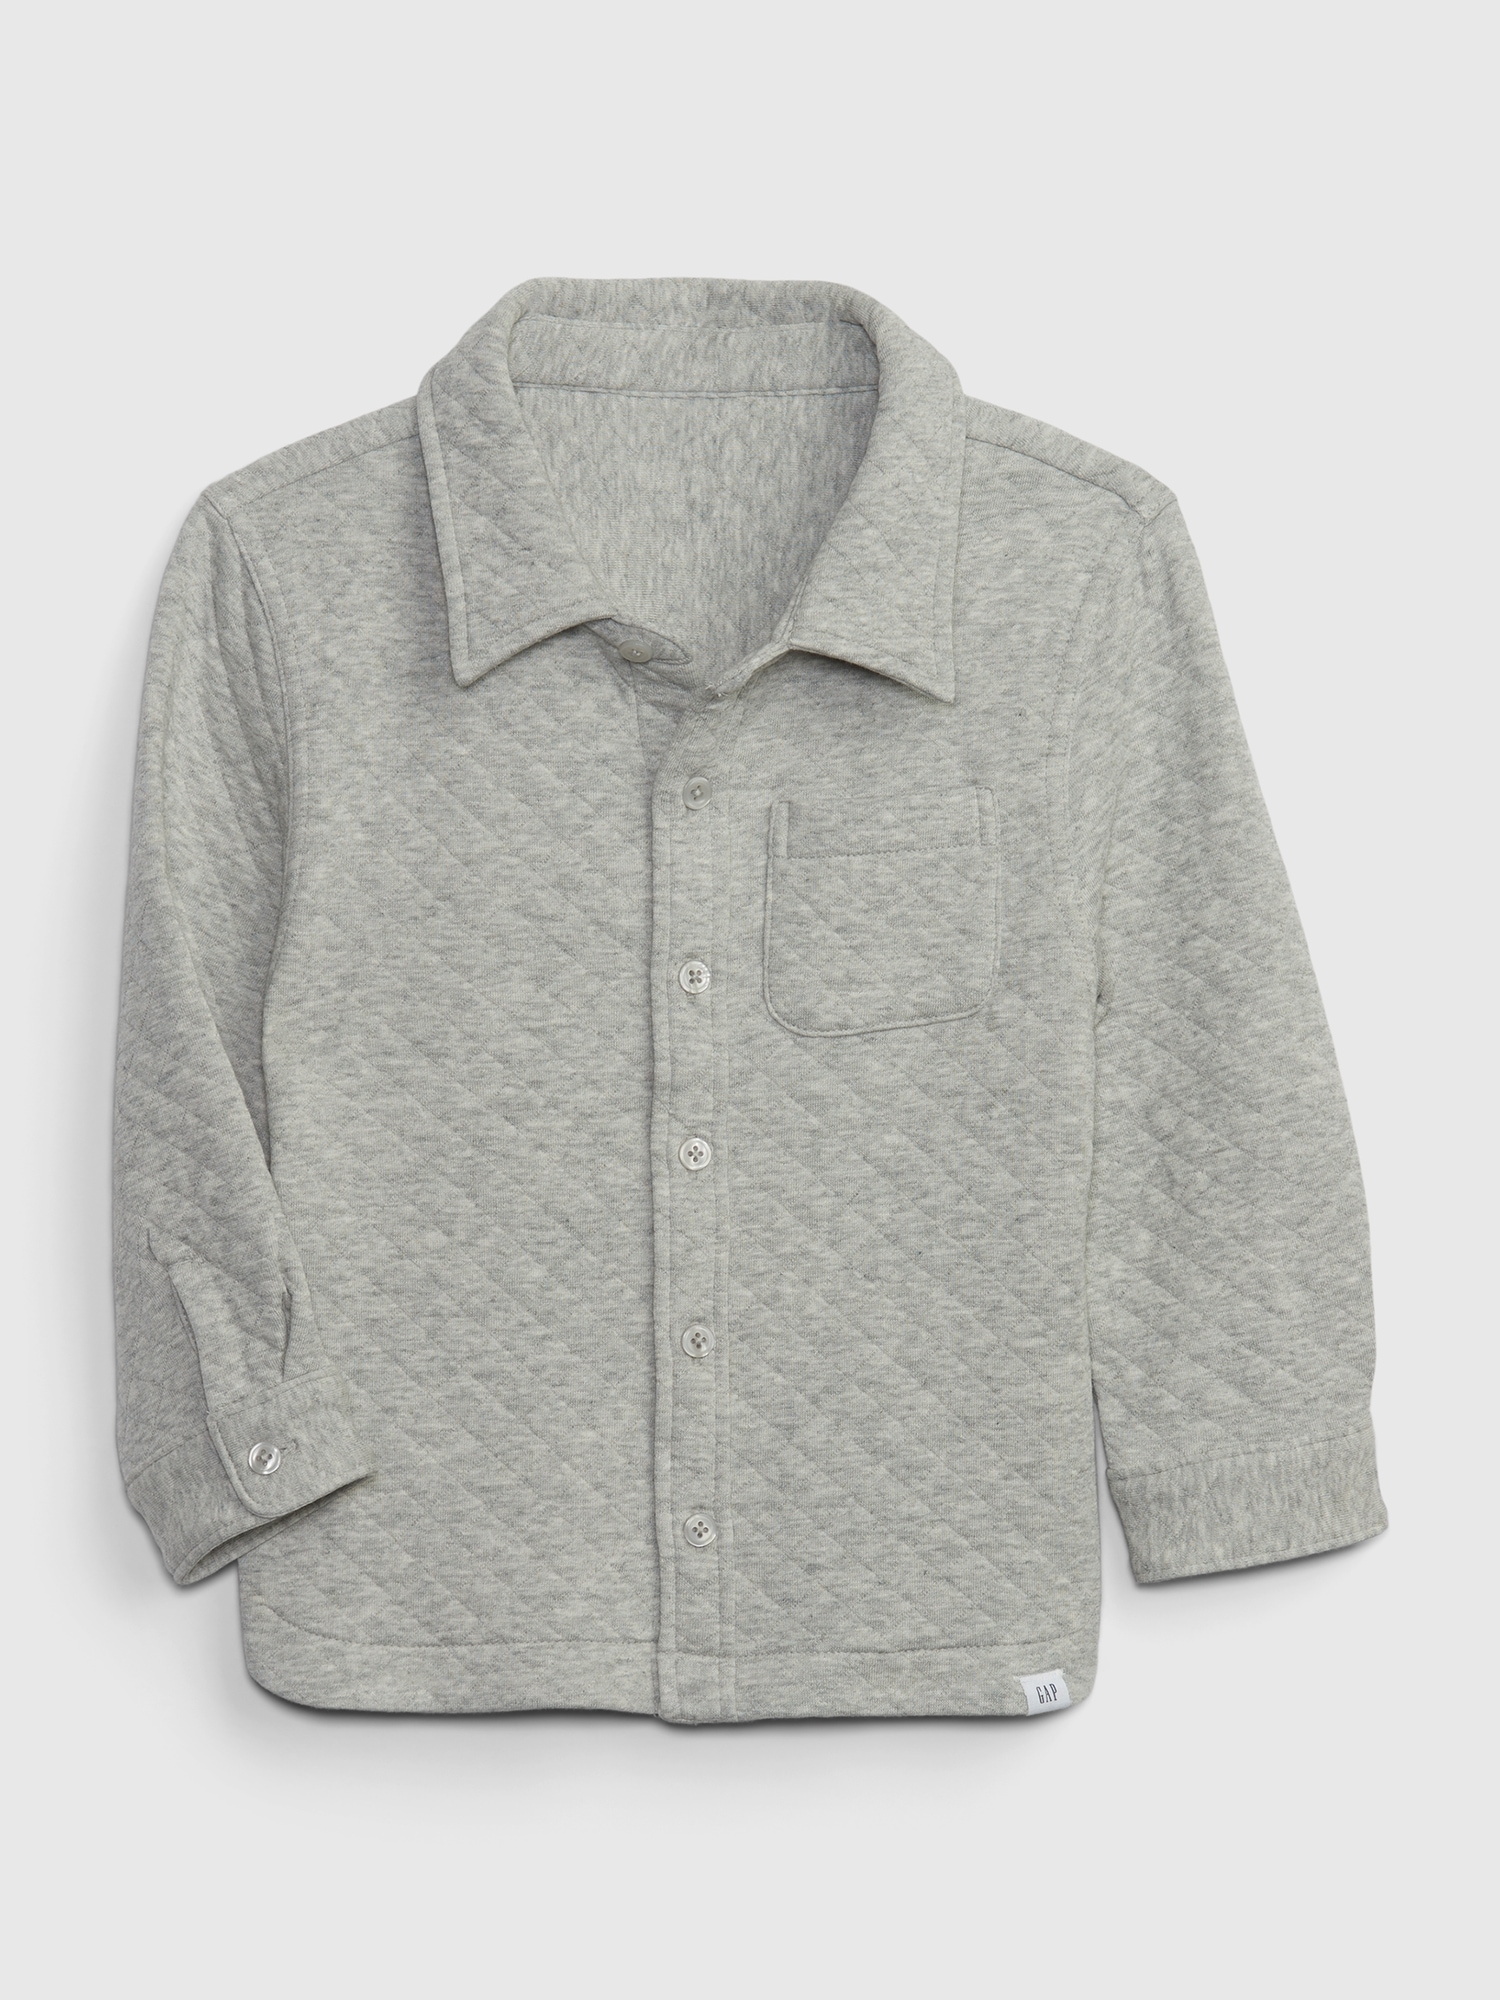 Toddler Quilted Sweatshirt Jacket | Gap